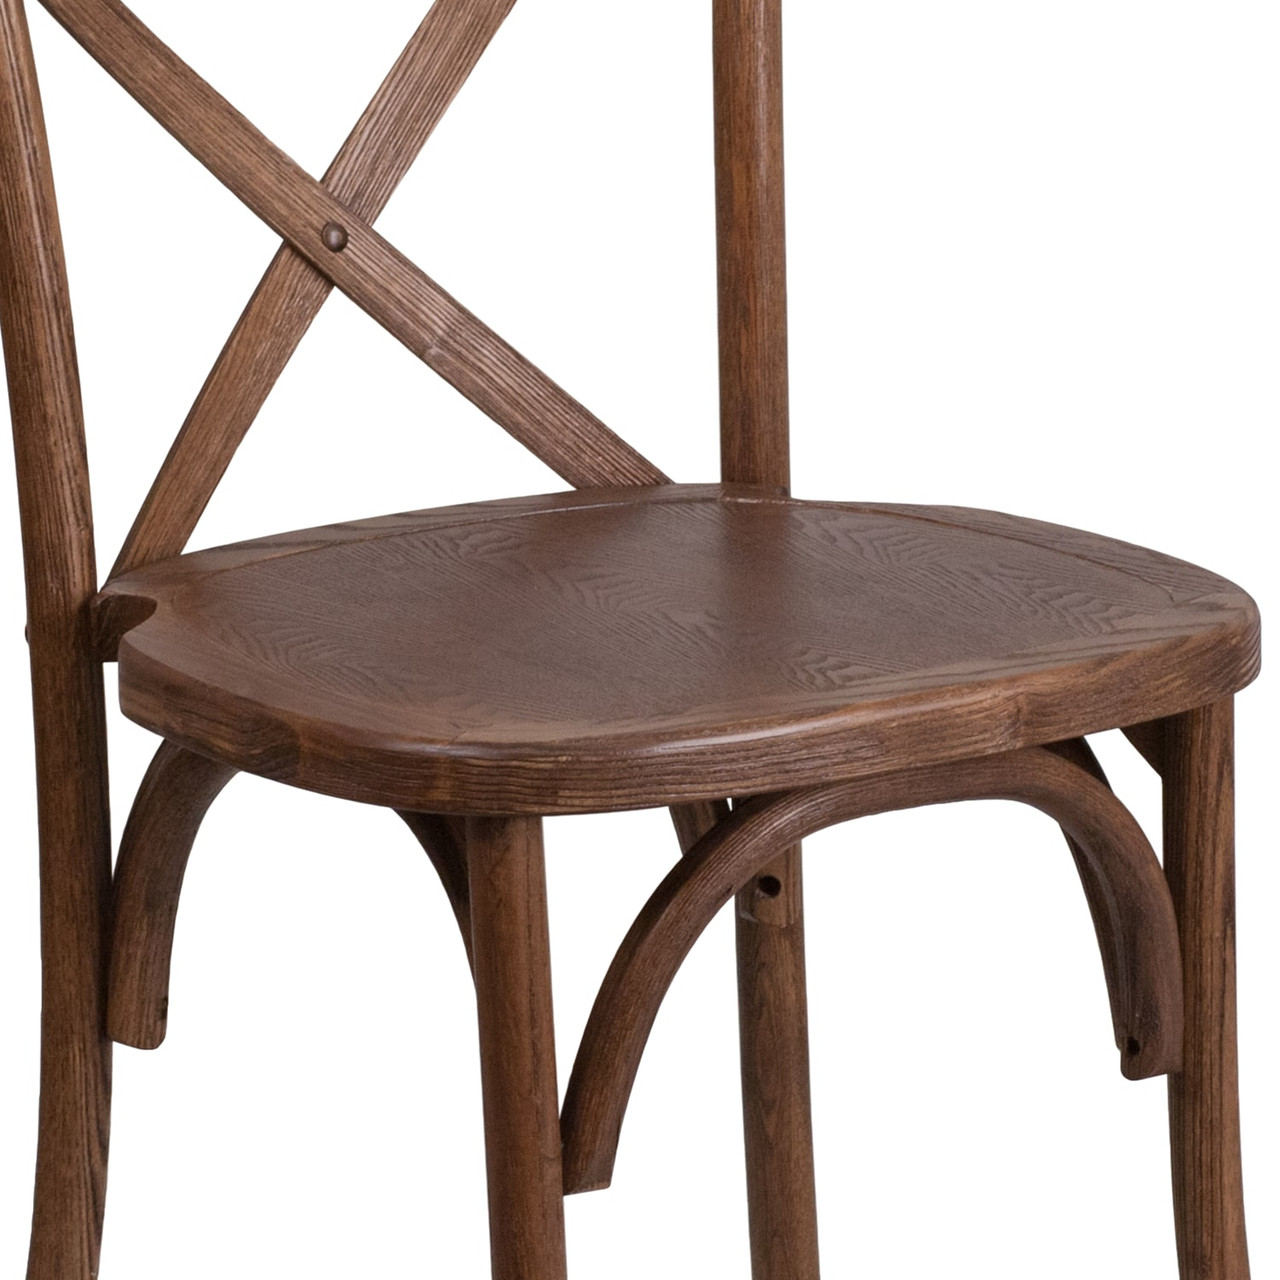 HERCULES Series Stackable Pecan Wood Cross Back Chair